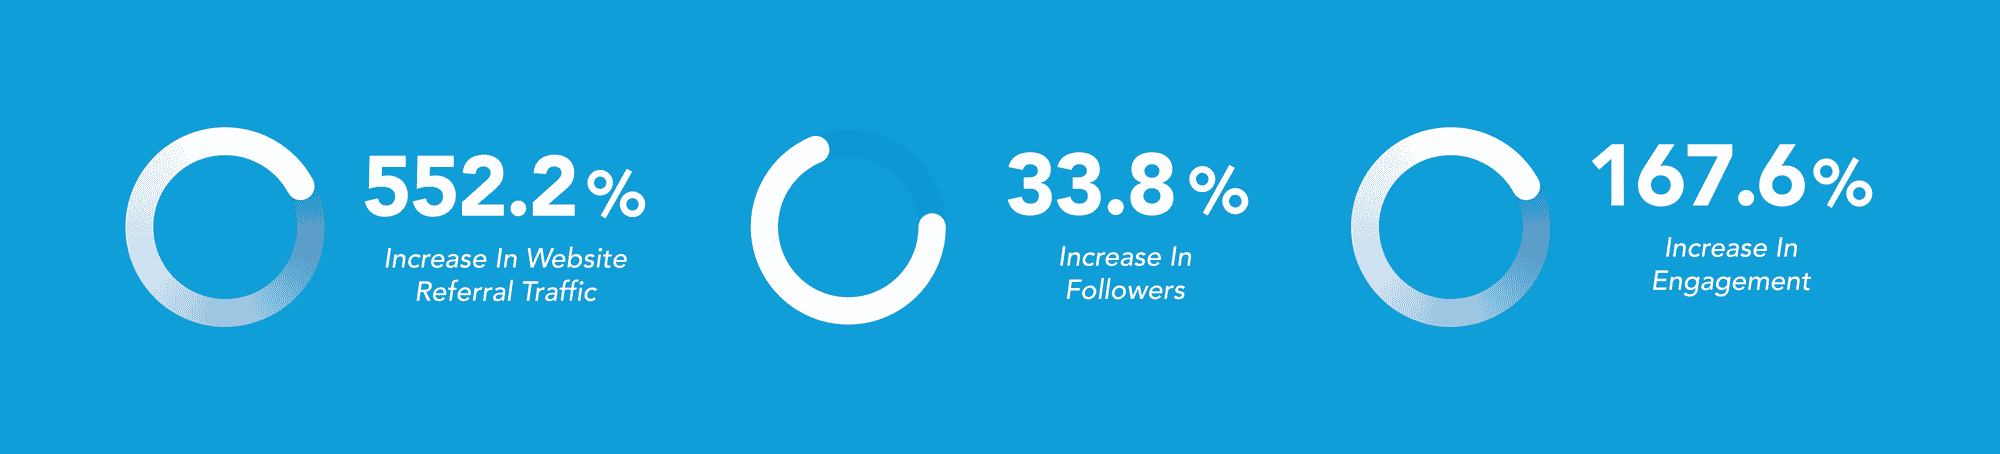 555.2 percent increase in website referral traffic, 33.8 percent increase in followers, 167.6 percent increase in engagement